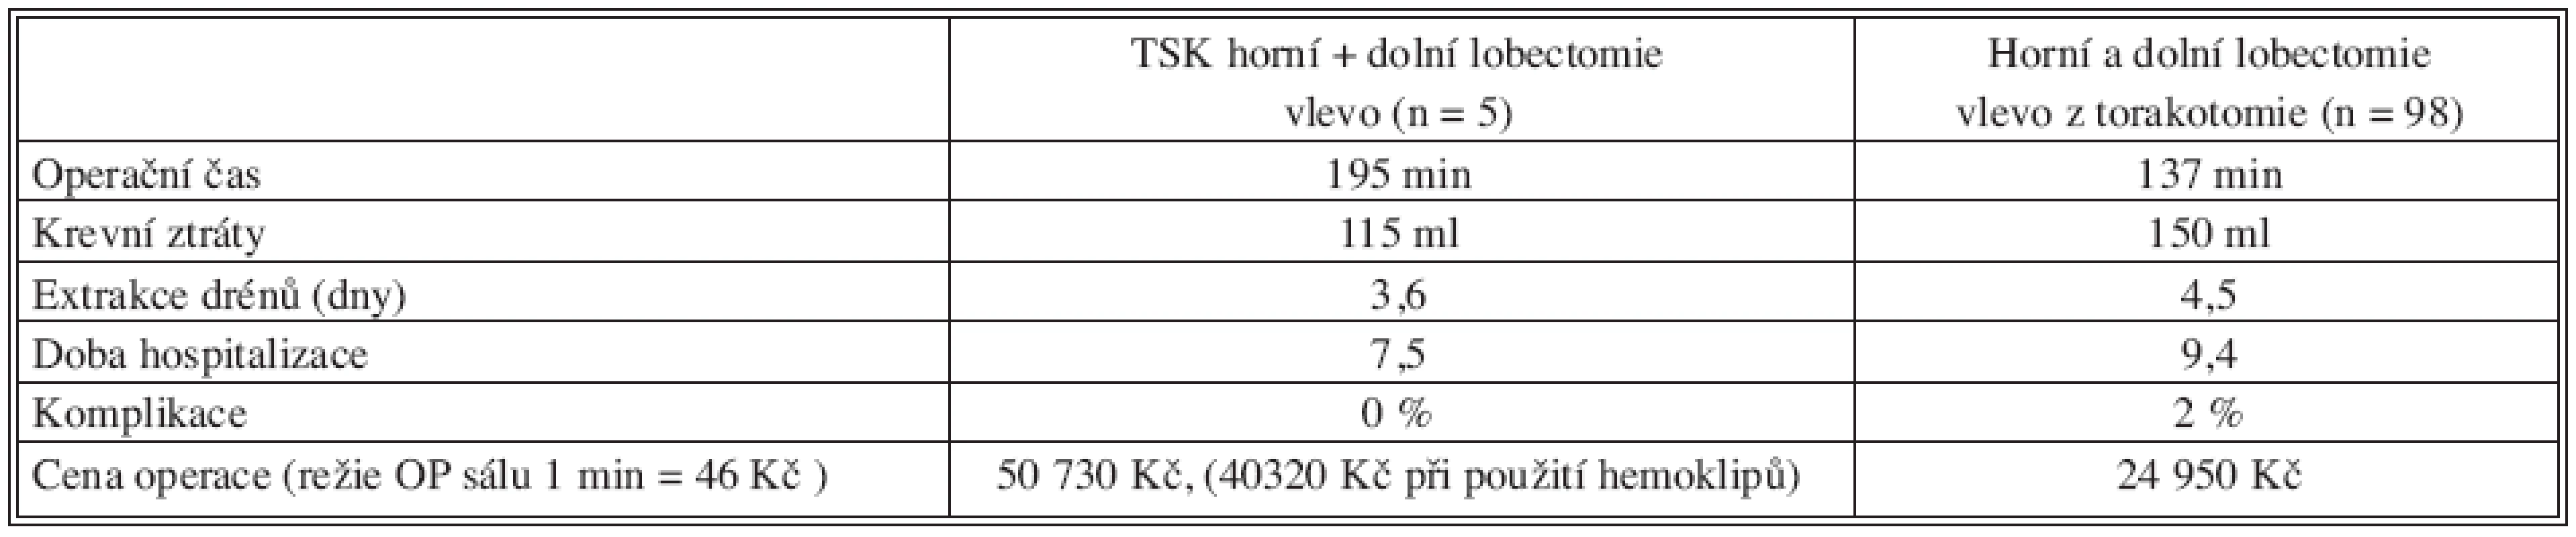 Porovnání výsledků TSK lobektomie a lobektomie z torakotomie, průměrné hodnoty
Tab. 2. Comparison of the TSK lobectomy and lobectomy from thoracotomy results, mean values